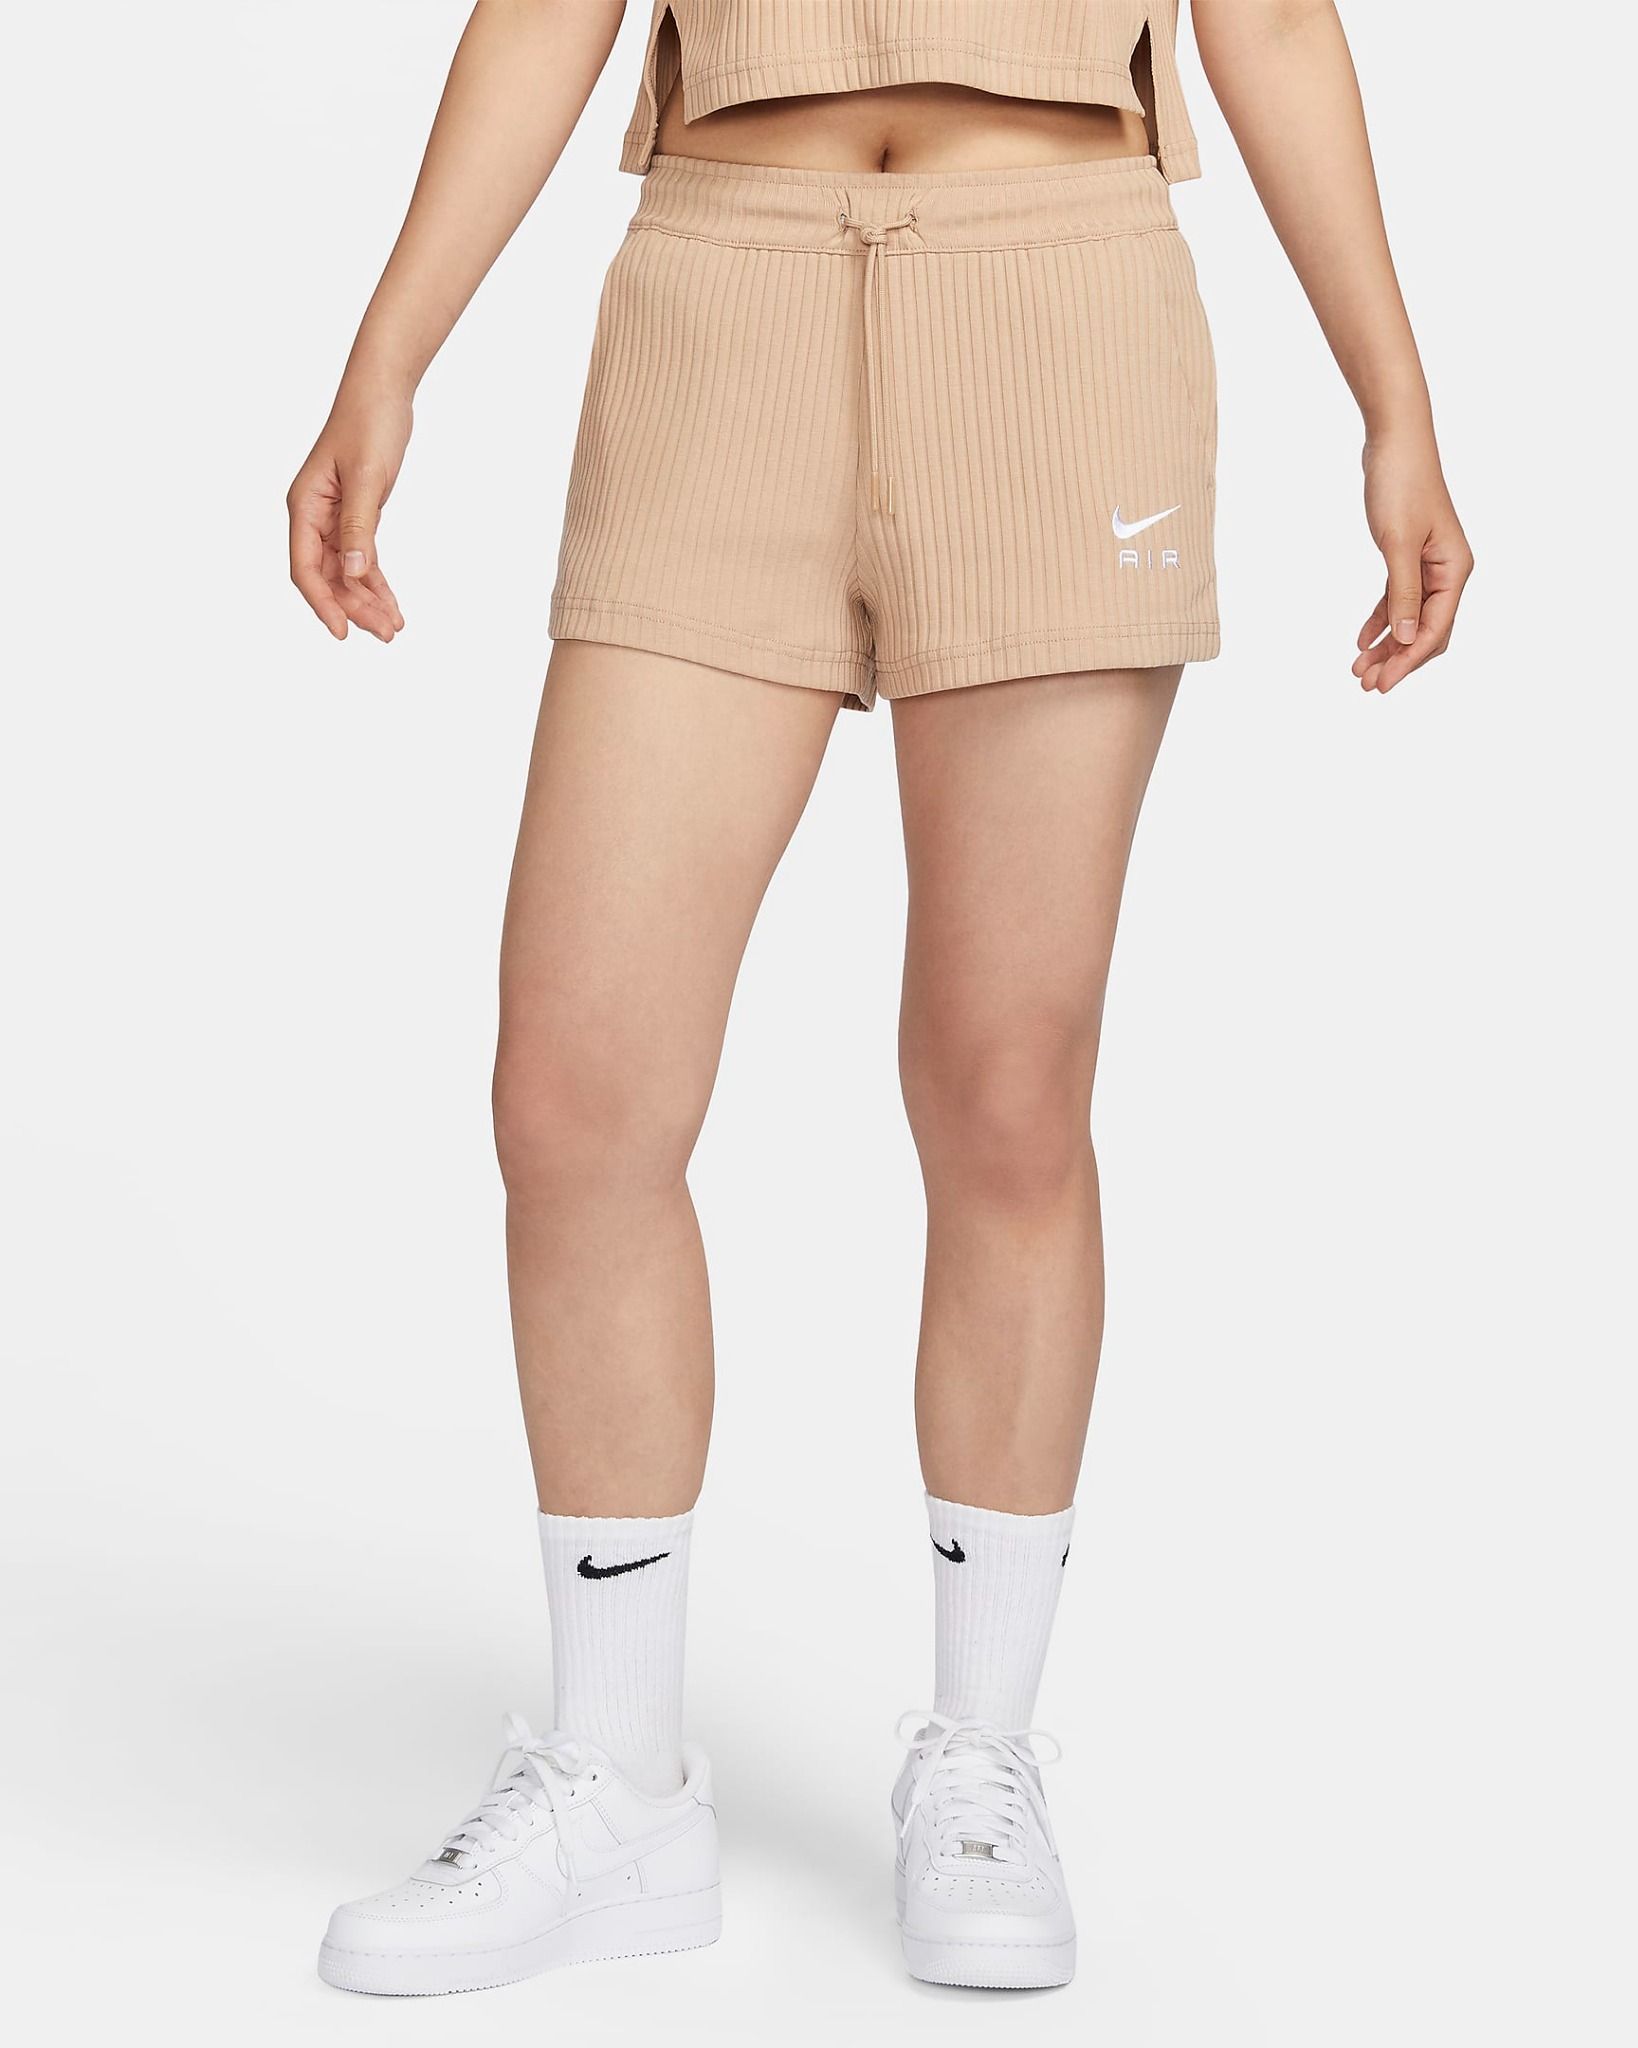 Nike - Quần ngắn thể thao Nữ Sportswear Women's Ribbed Jersey Shorts